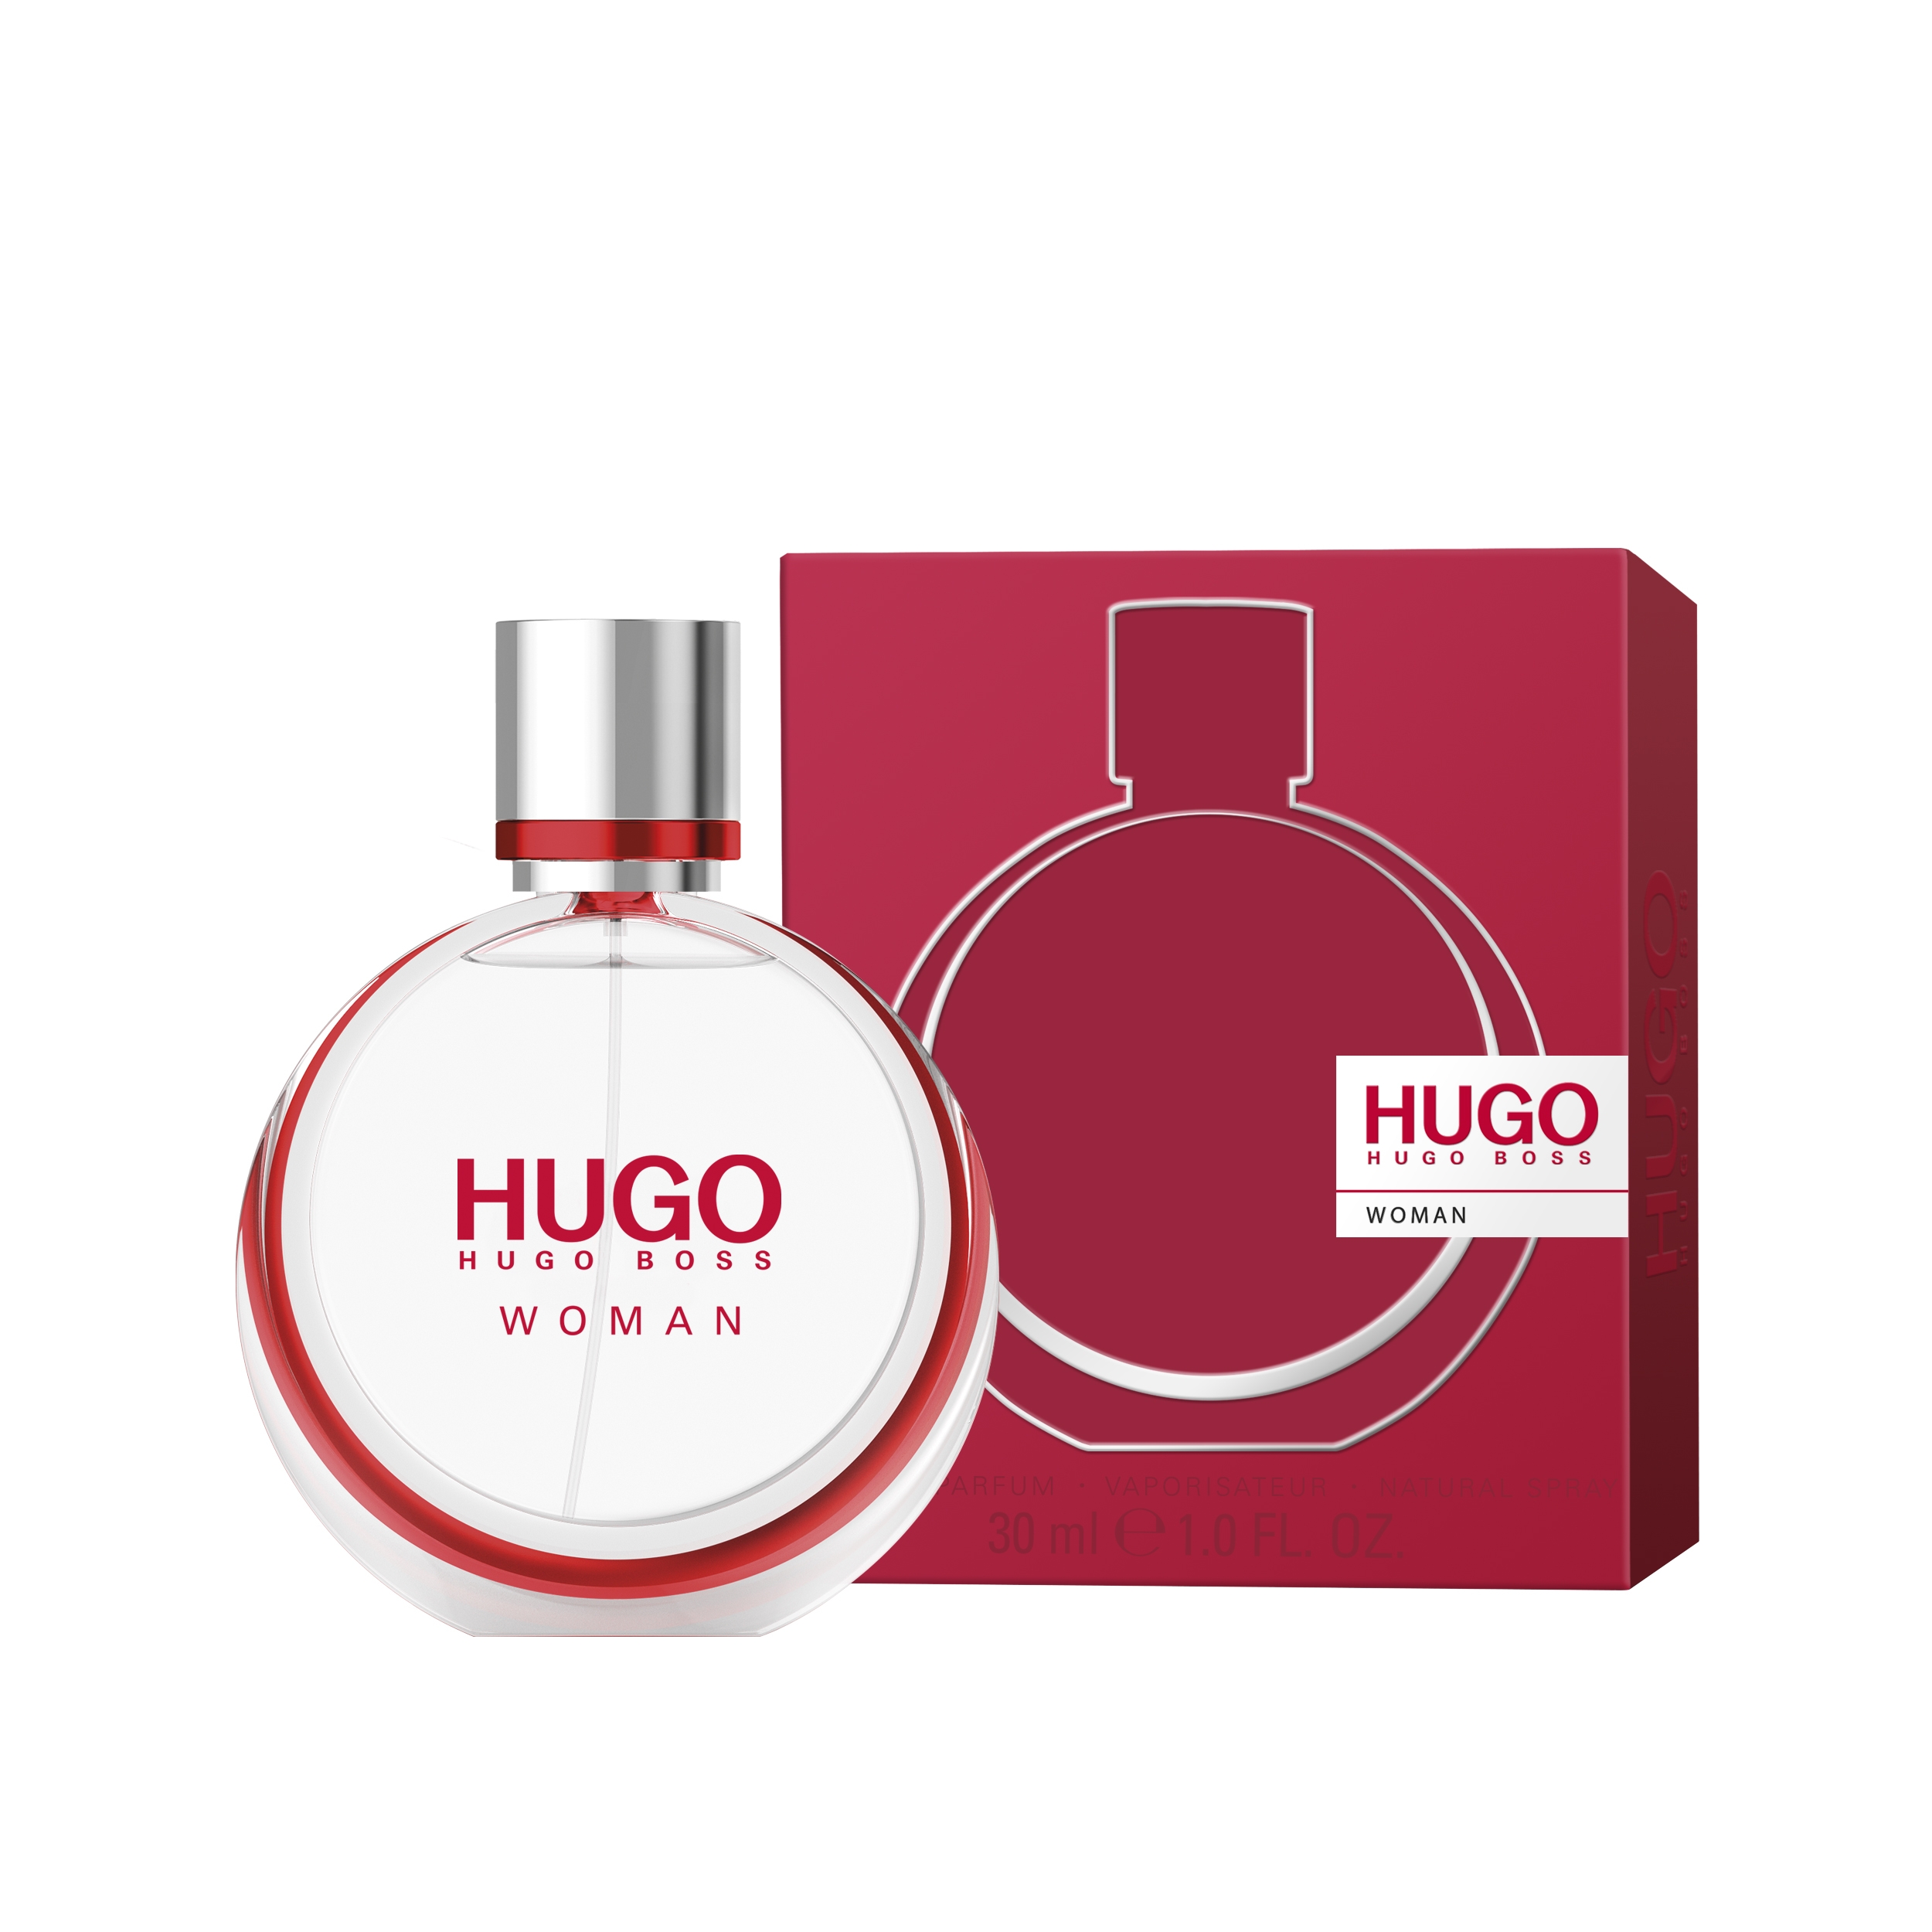 Hugo min. Hugo Boss woman 50ml EDP. Hugo Boss Hugo woman Eau de Parfum. Boss парфюмерная вода Hugo woman 50 мл. Hugo Boss Hugo woman 75 мл.